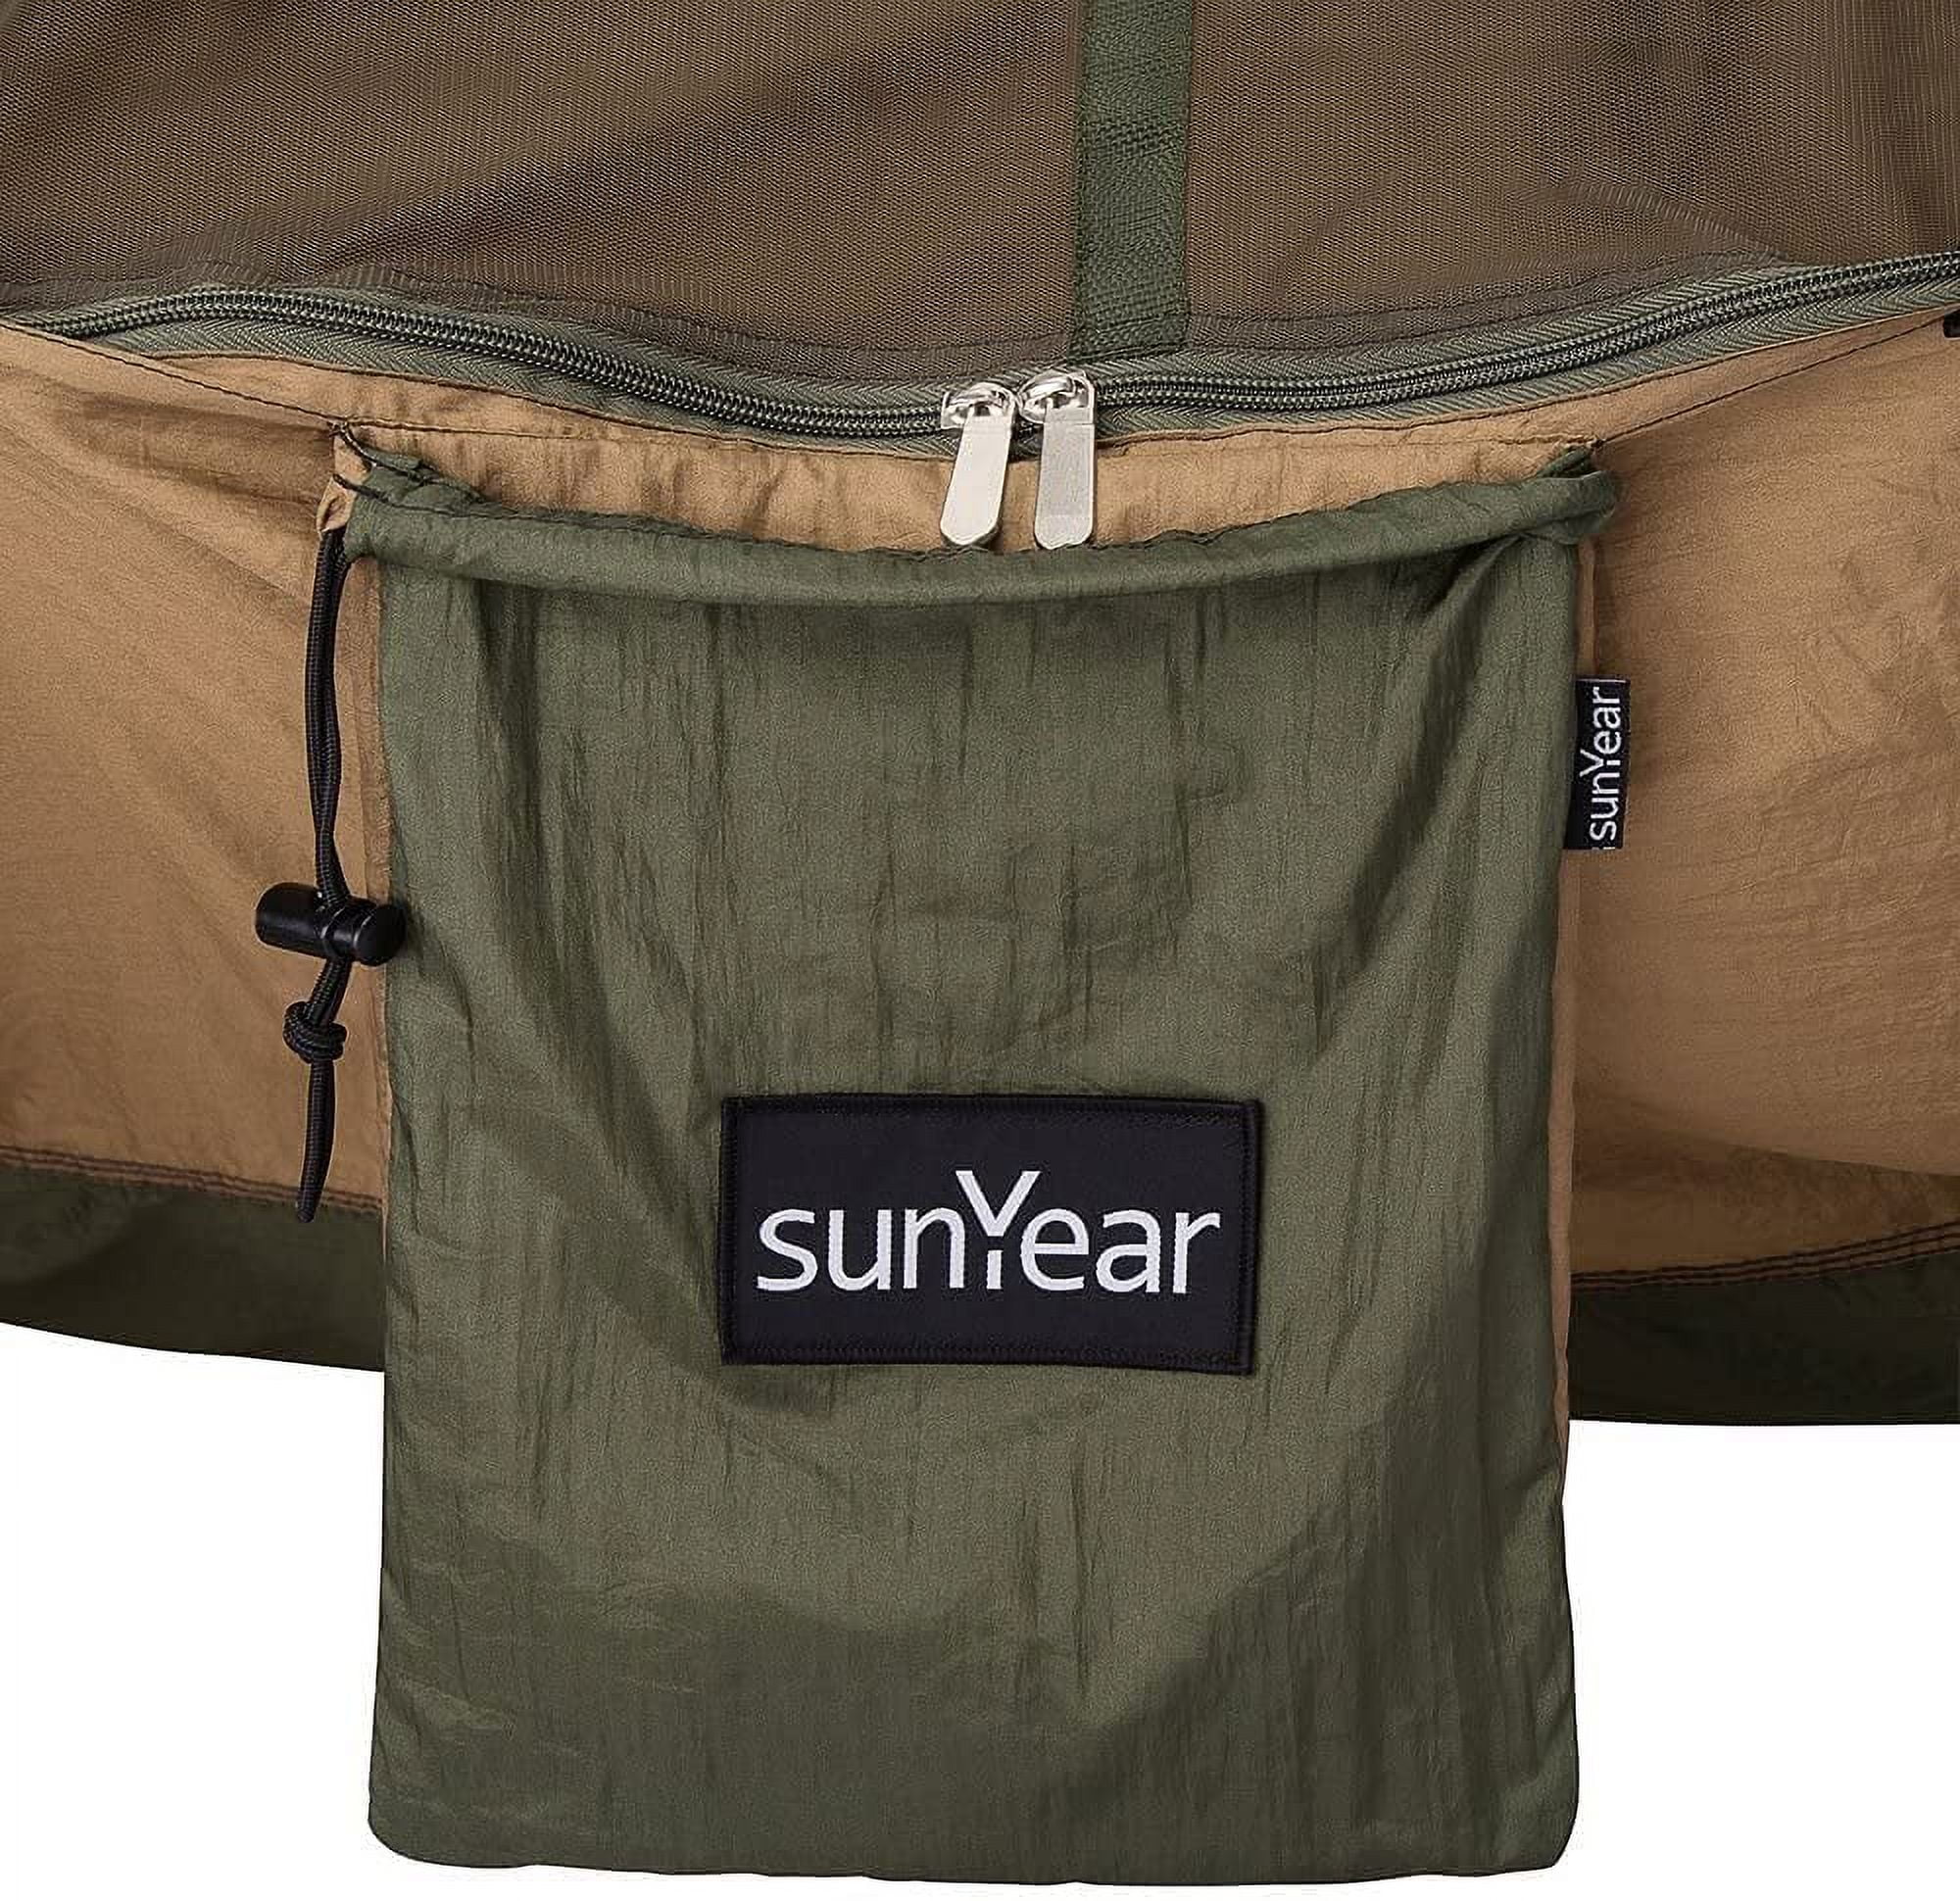 Sunyear Camping Hammock, Portable Double Hammock 78W*118L, Grey